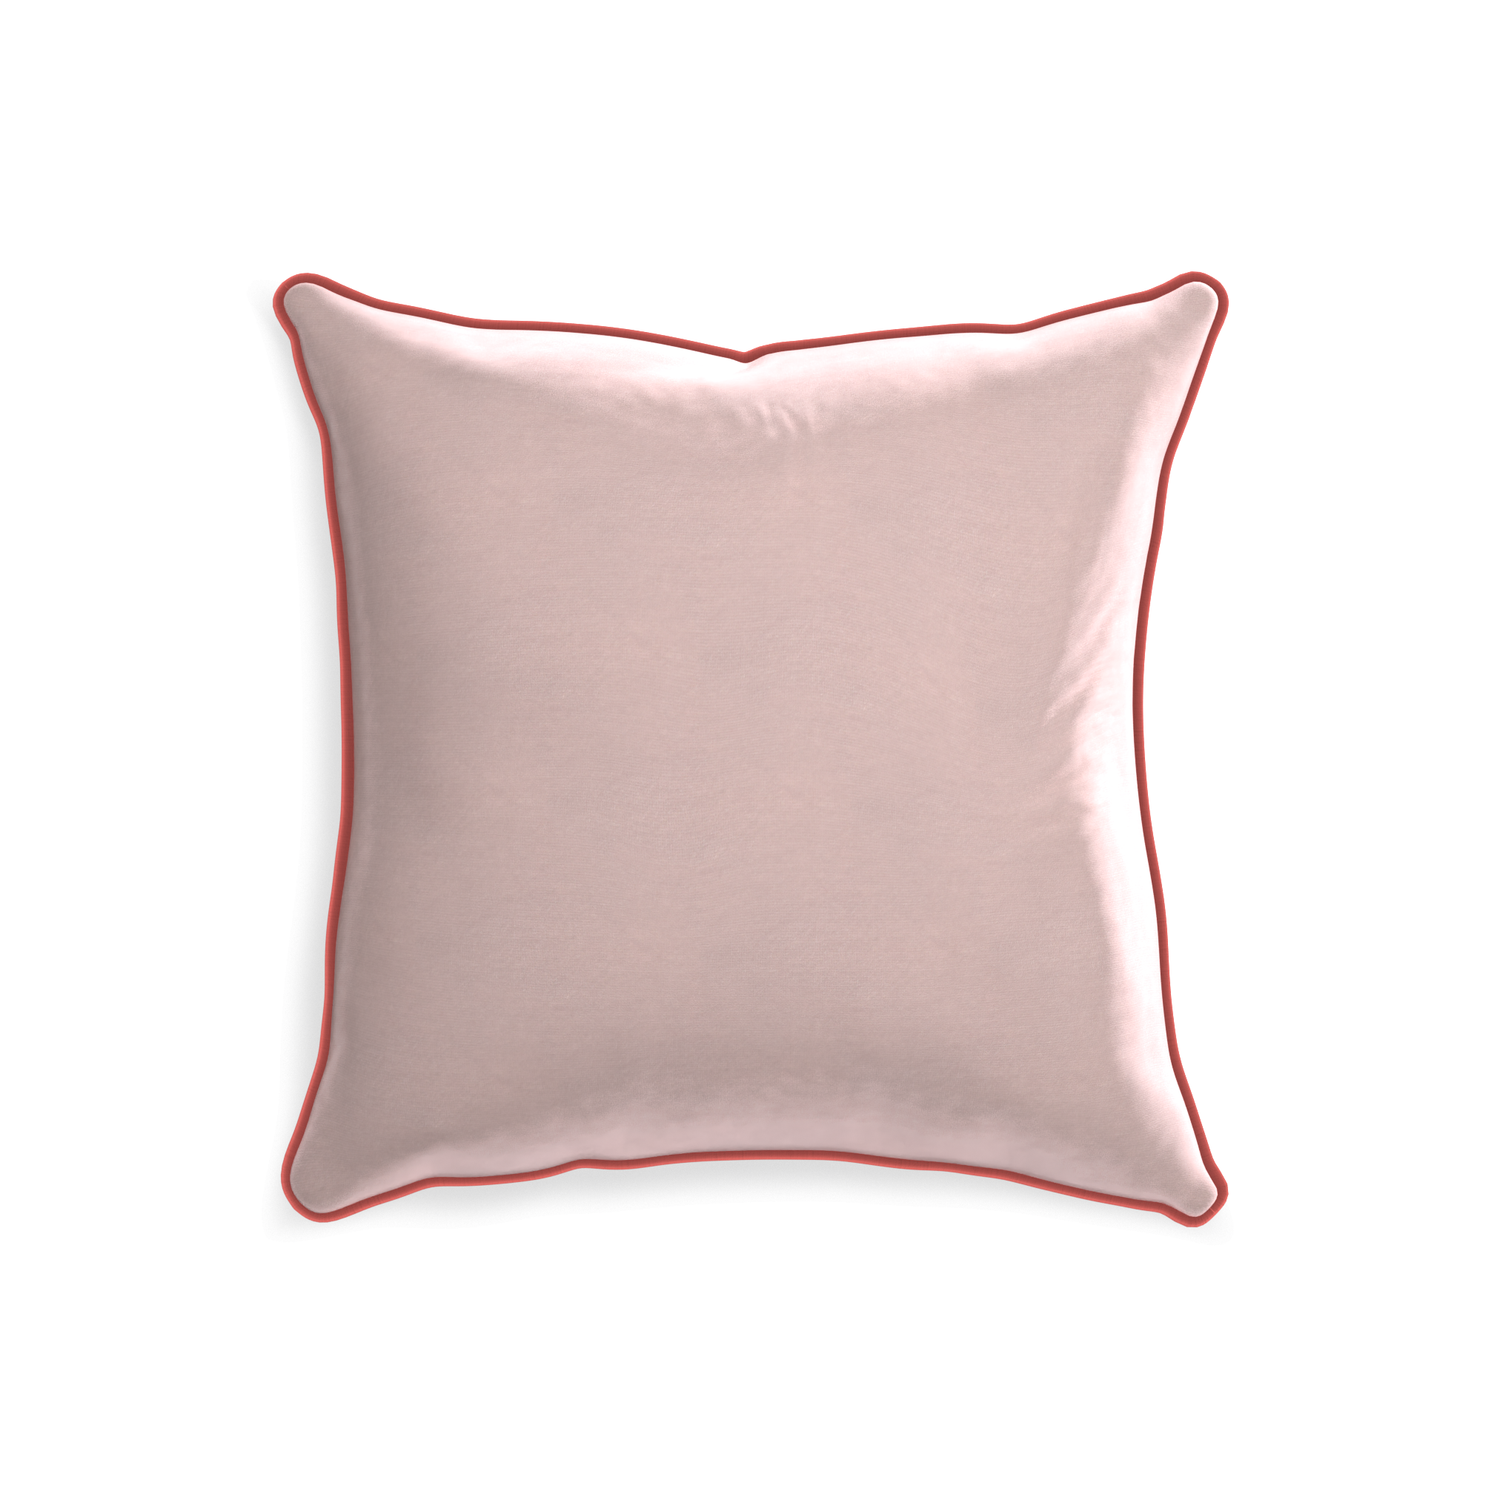 20-square rose velvet custom pillow with c piping on white background